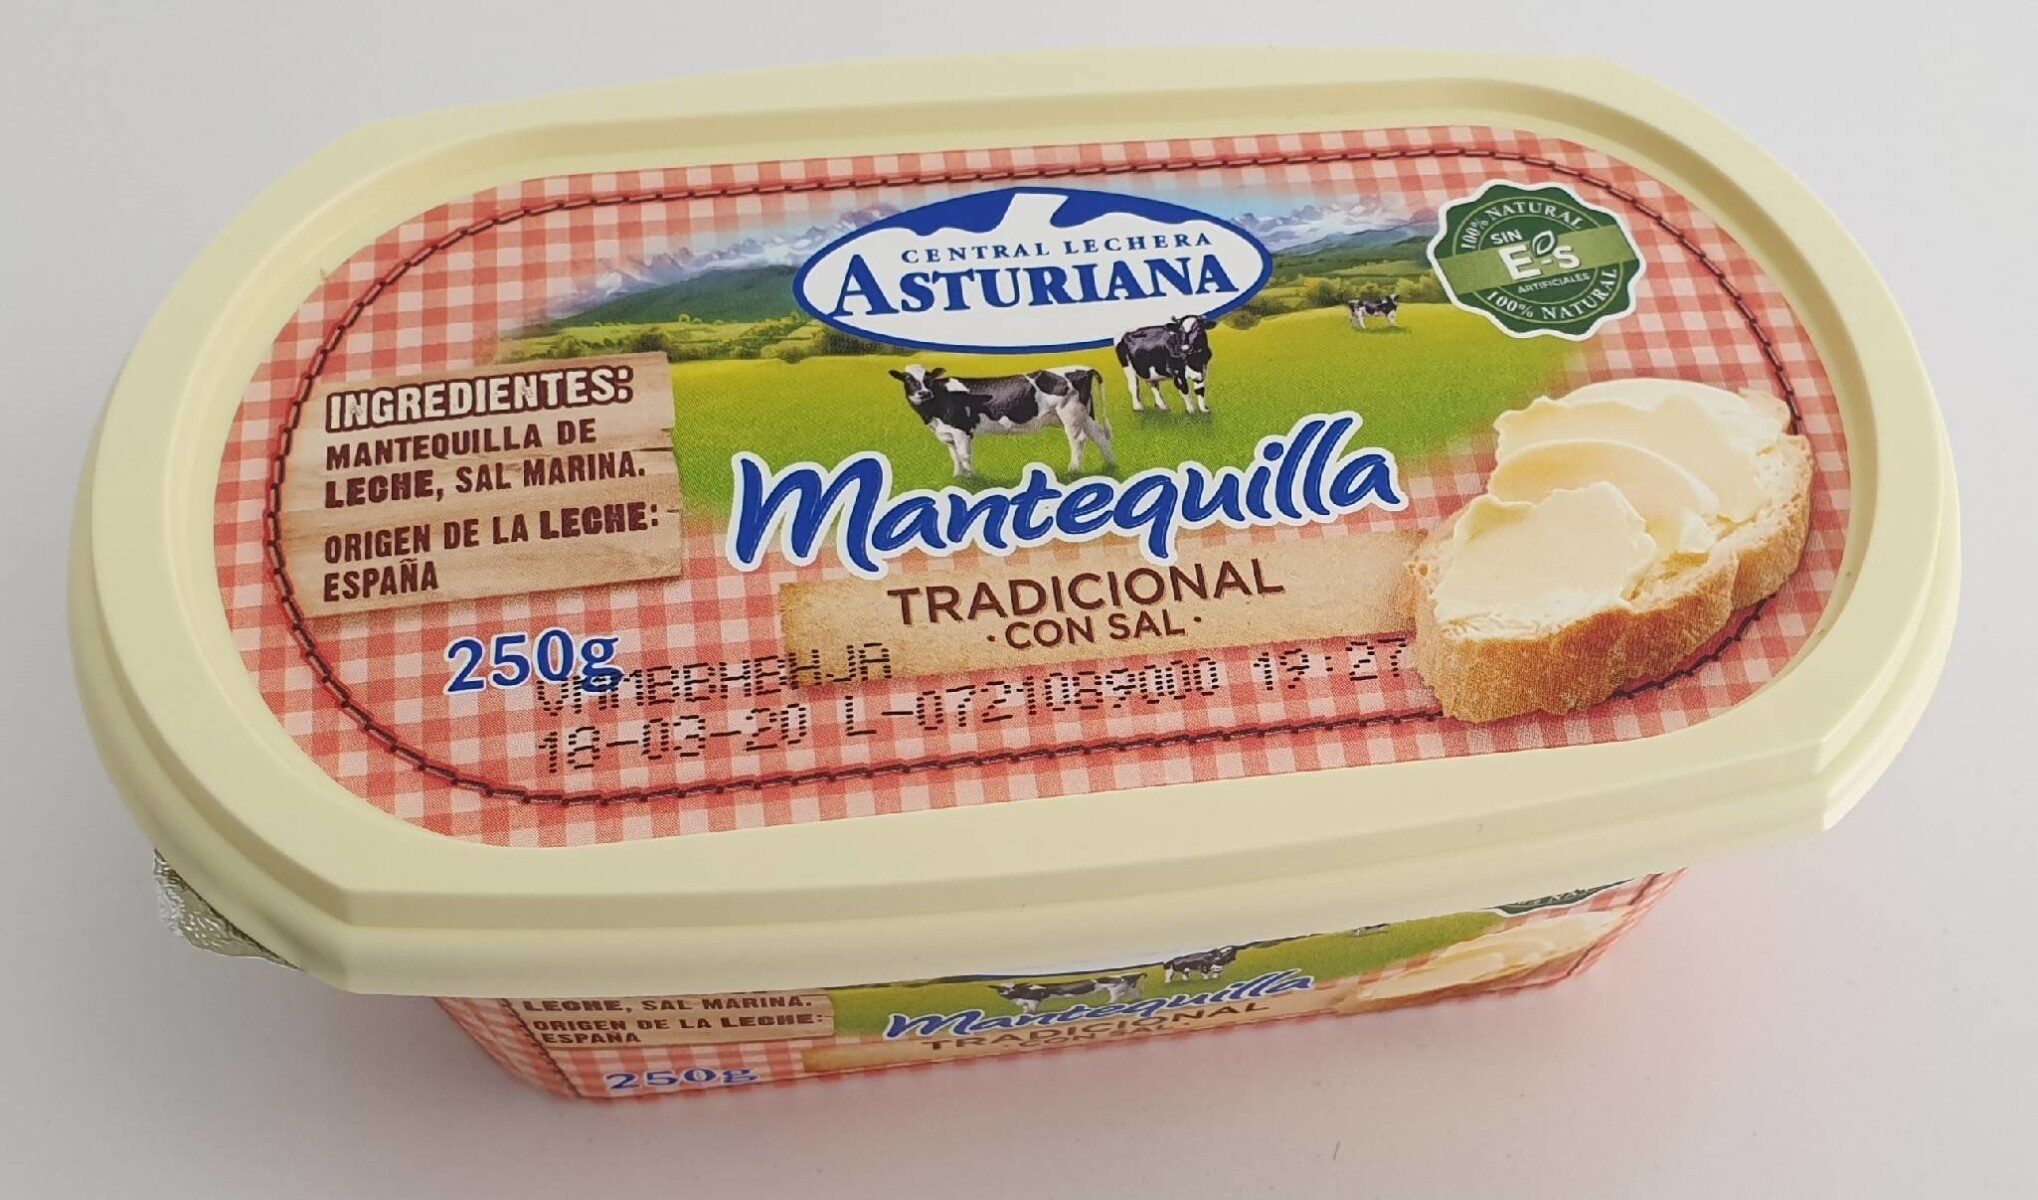 Mantequilla tradicional con sal tarrina - Product - es